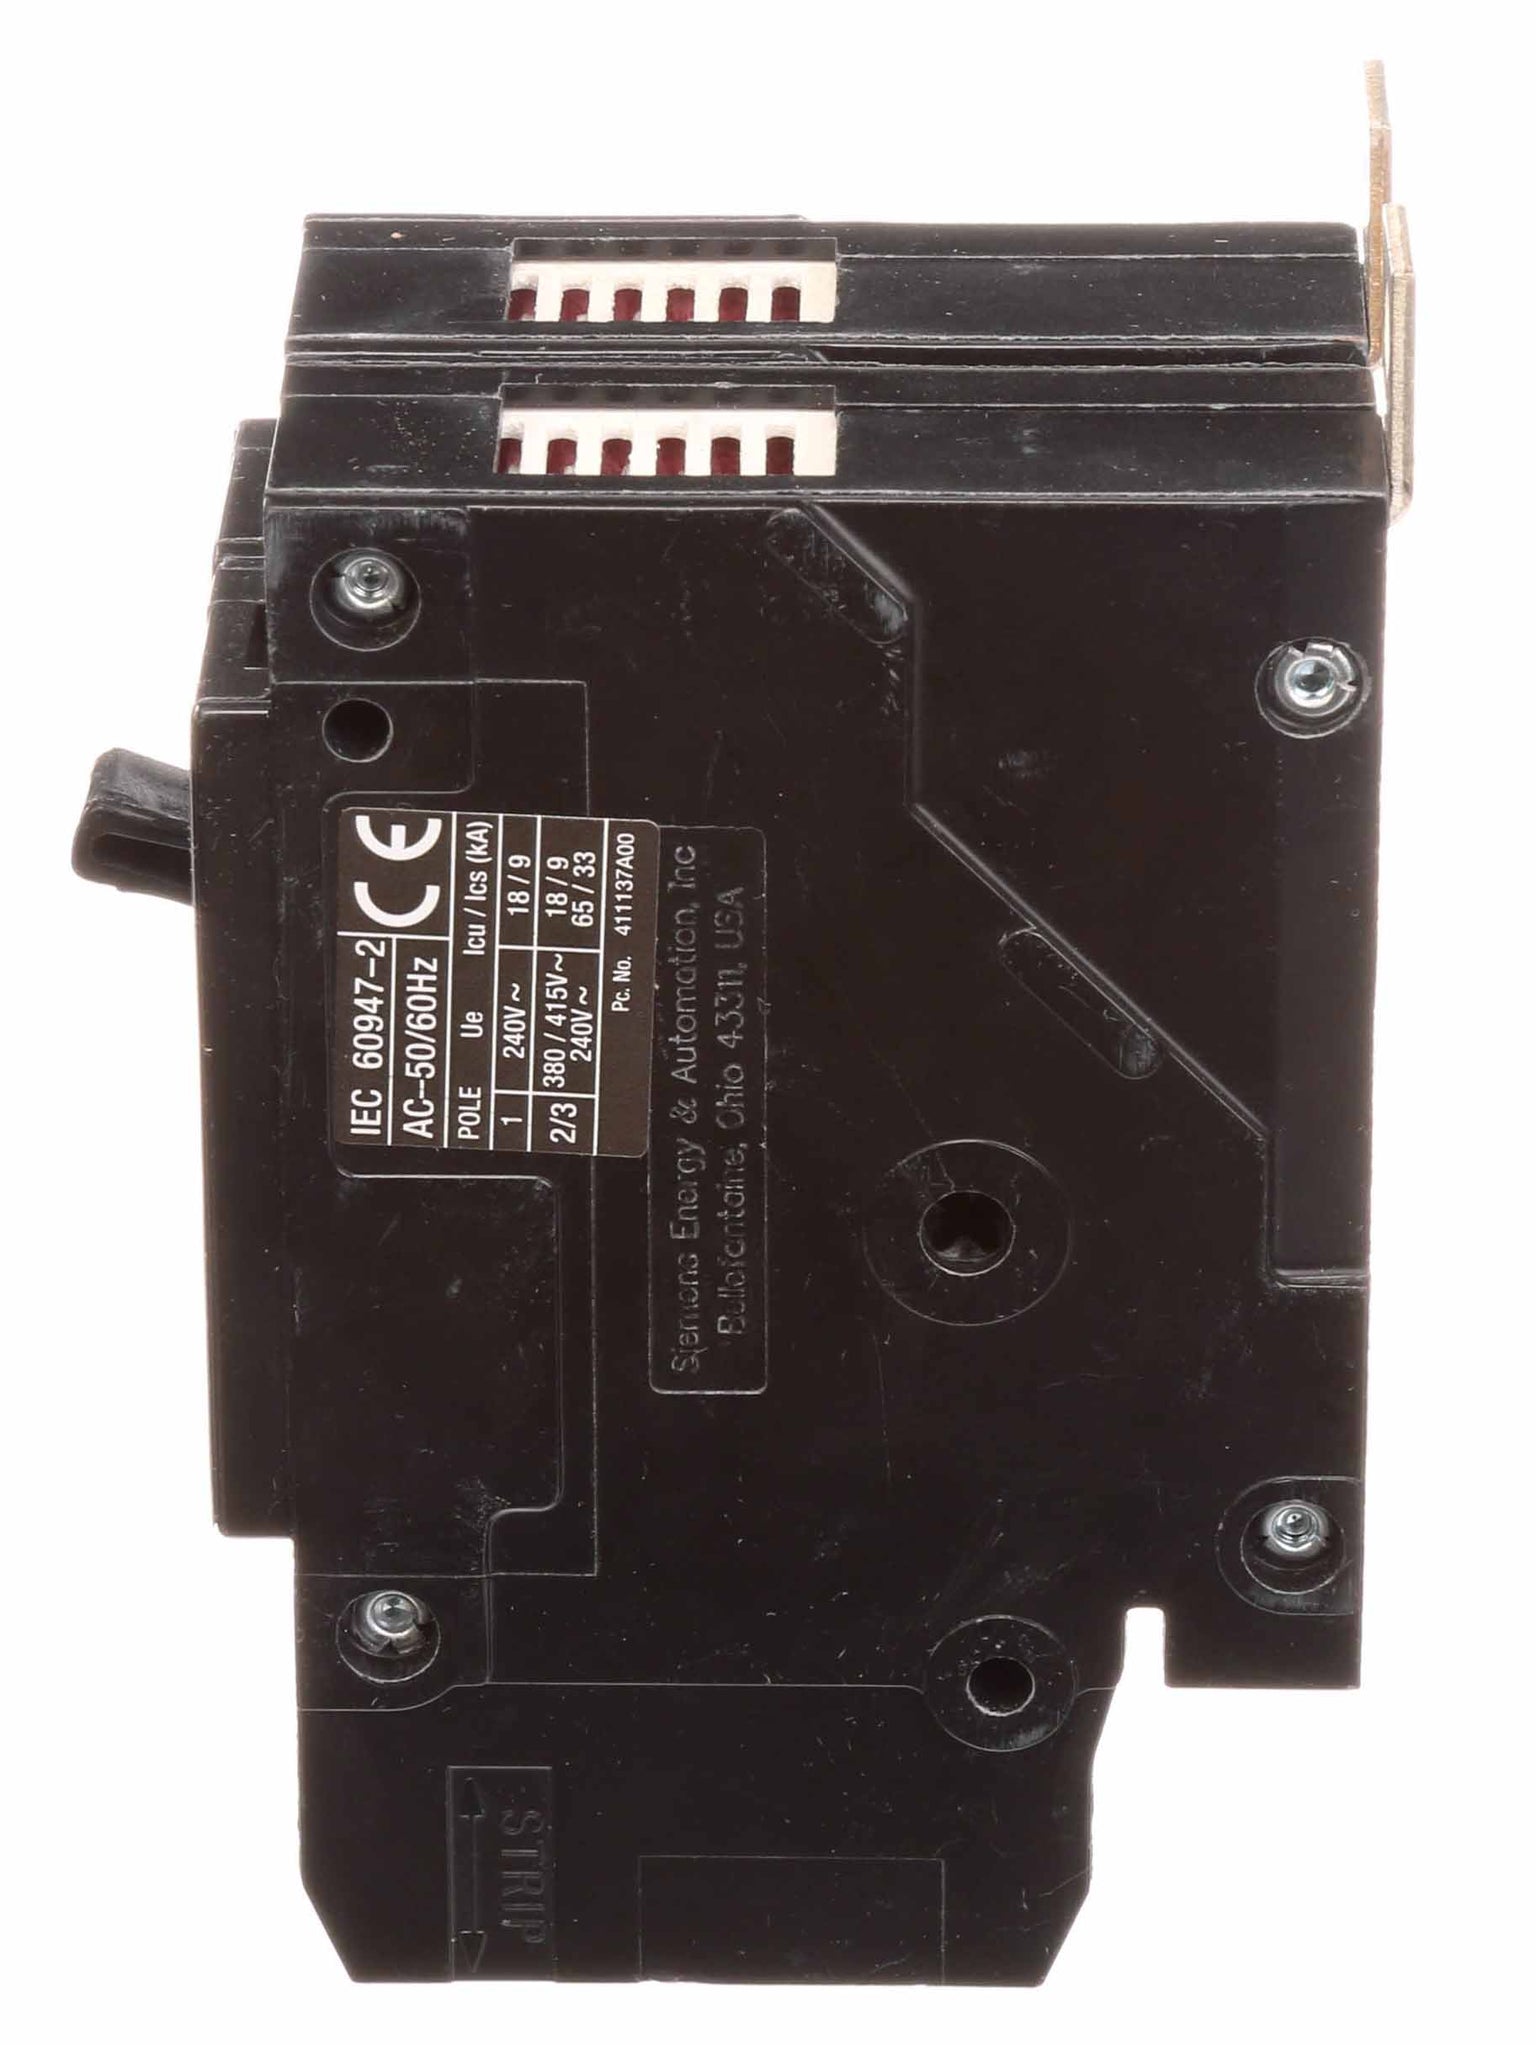 BQD215 - Siemens - 15 Amp Molded Case Circuit Breaker